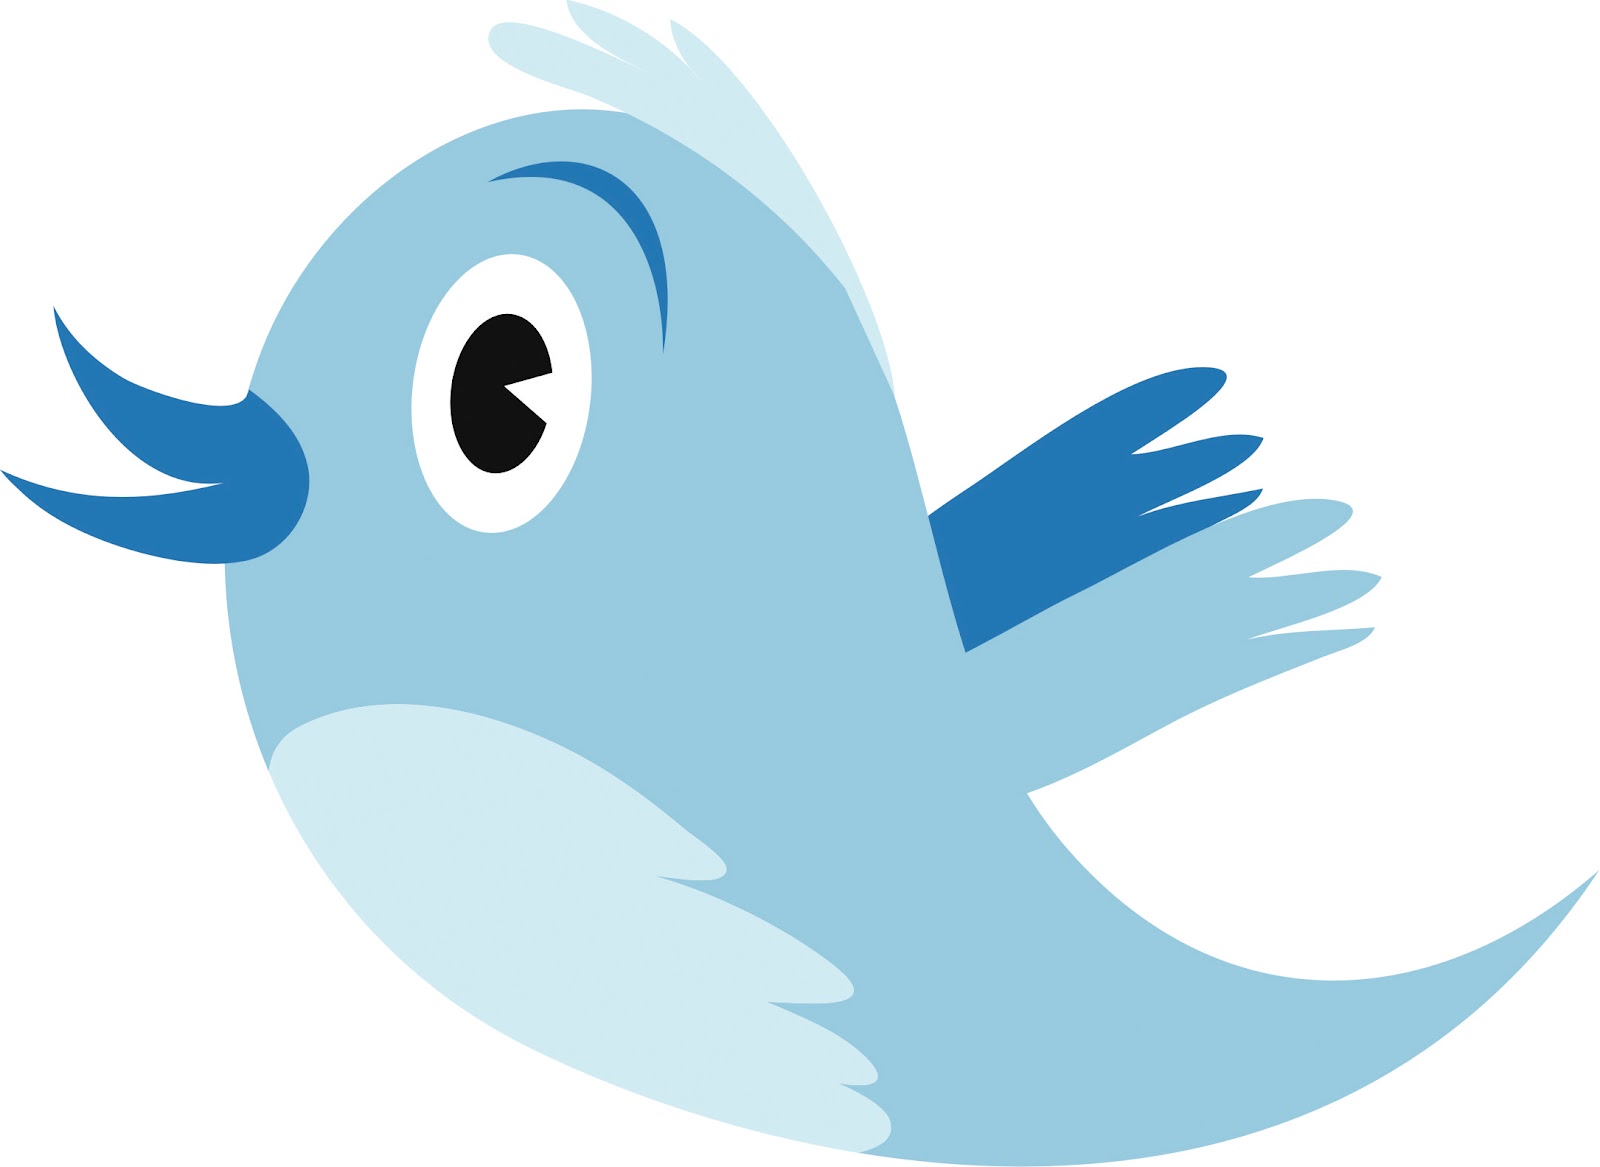 Twitter Logo Vector Png - ClipArt Best